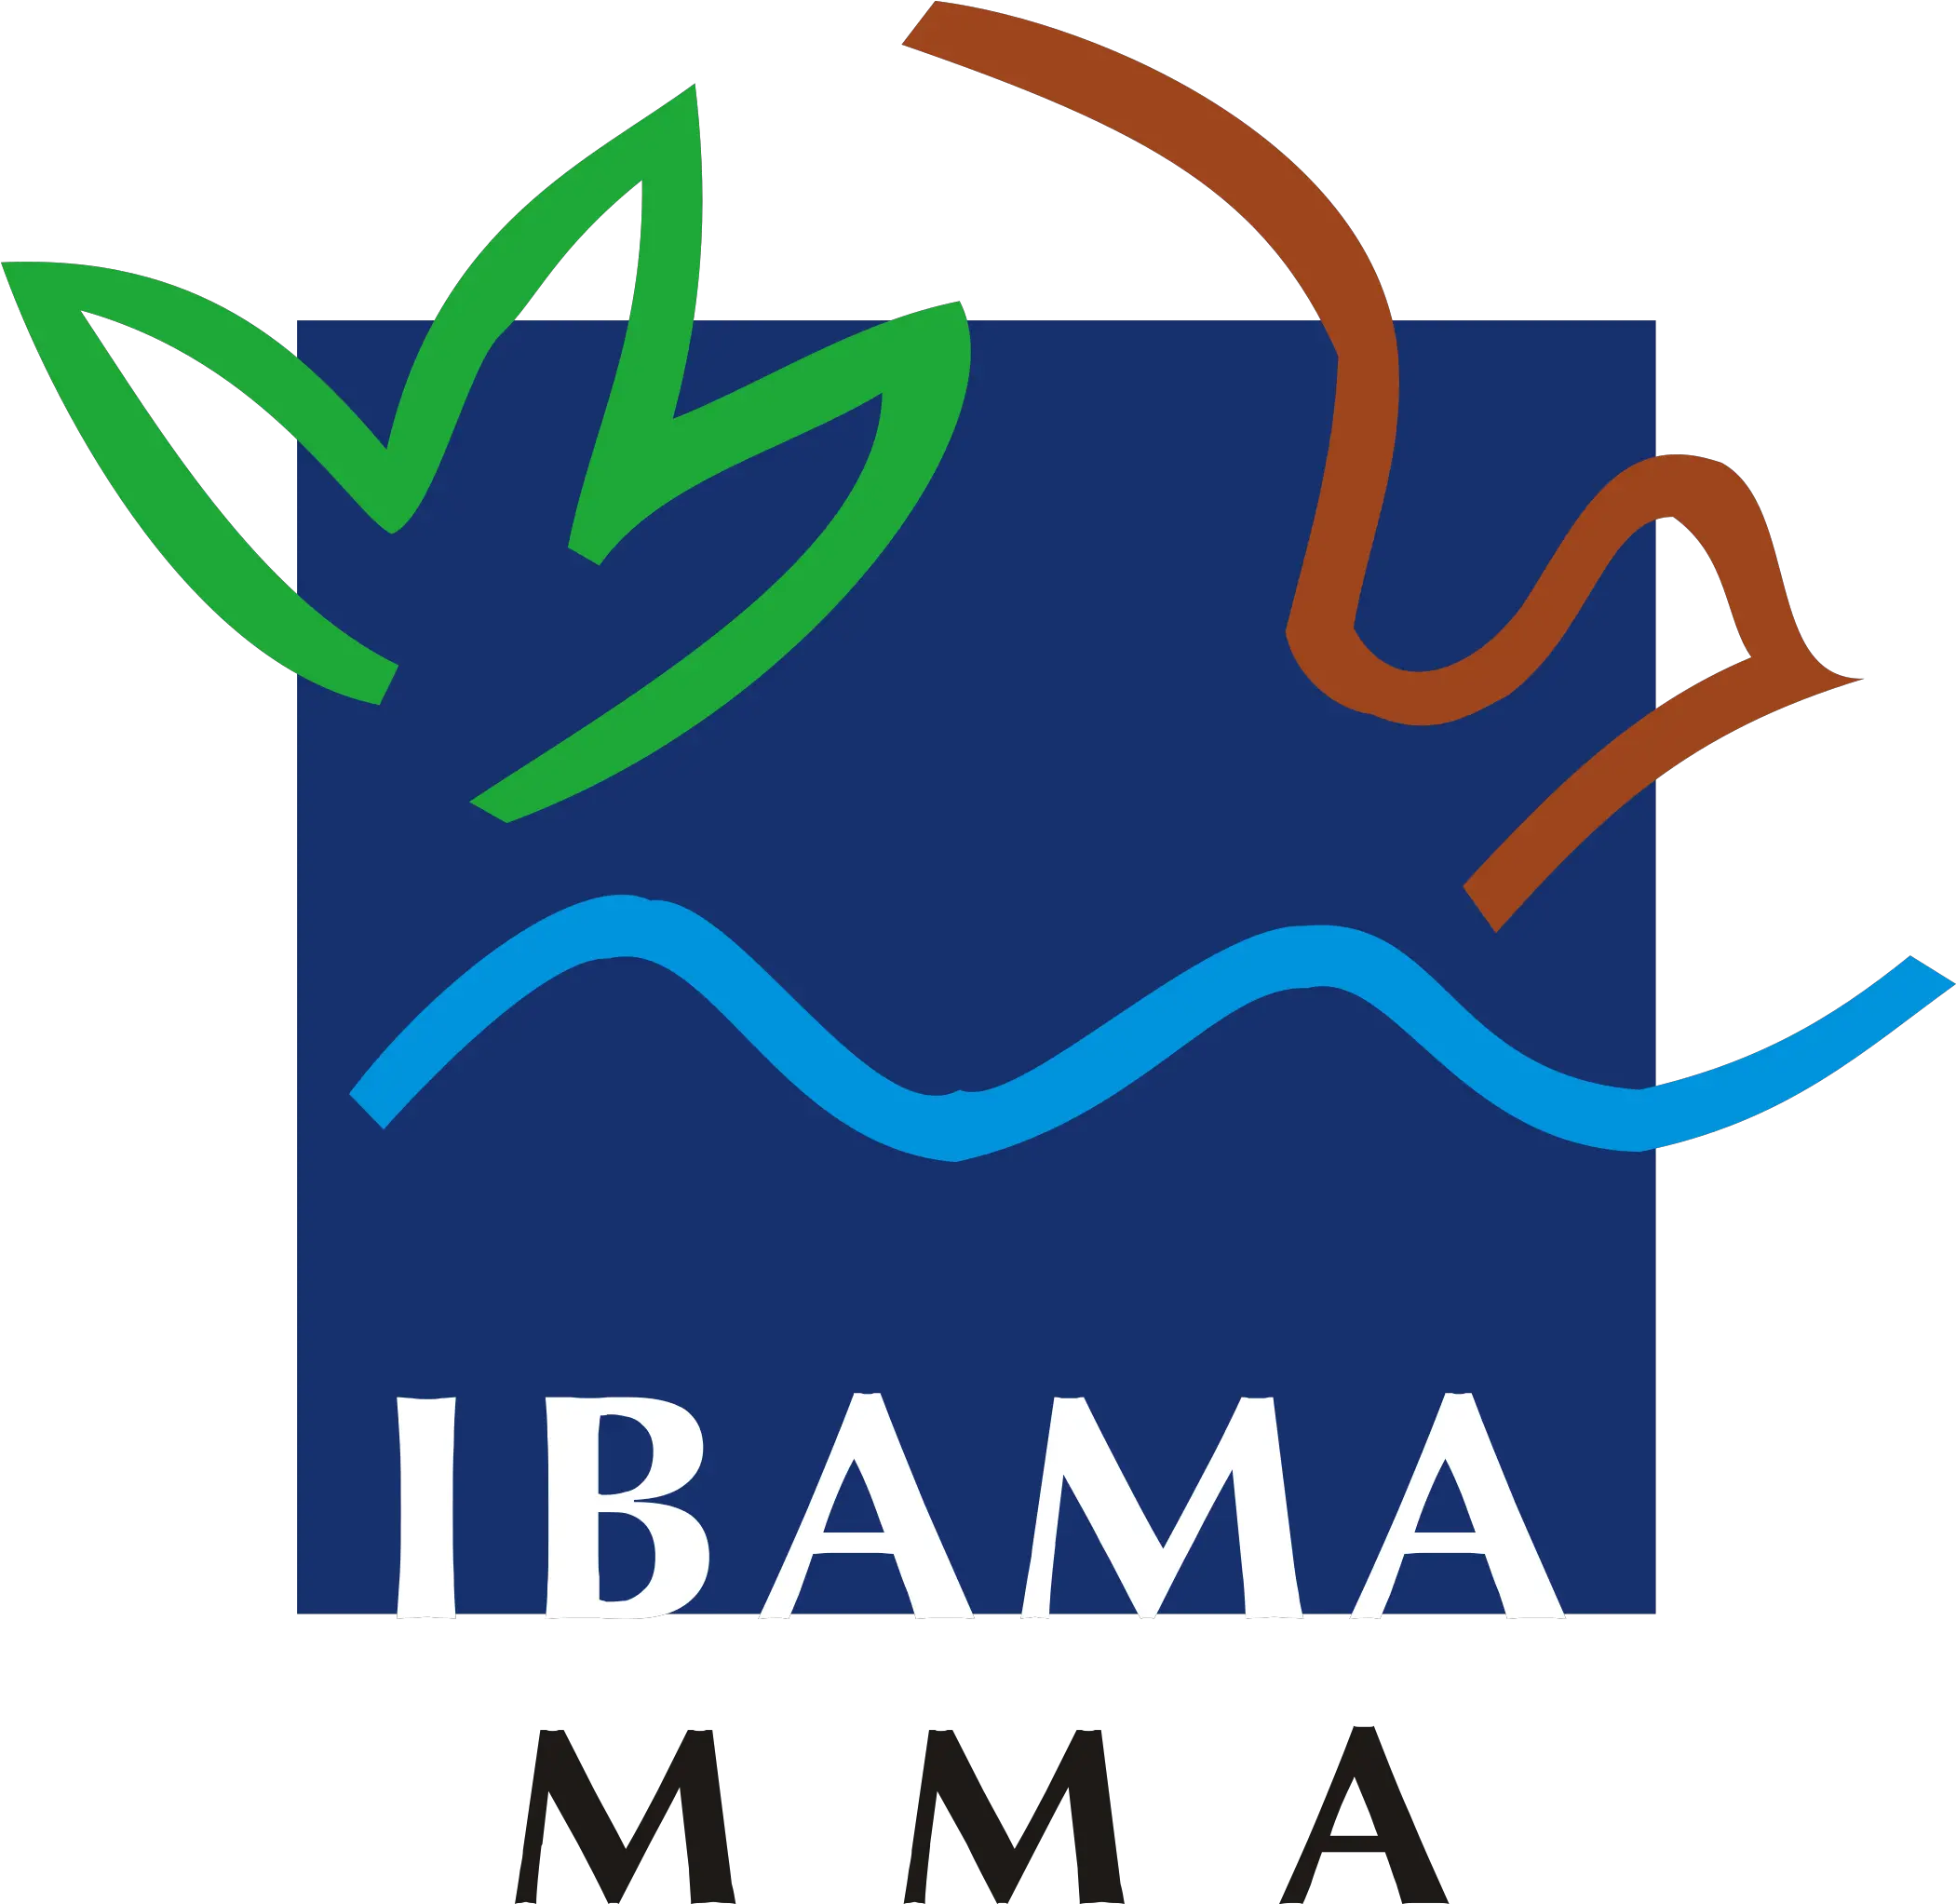 Ibama Logo Png E Vetor Download De Logo Brazilian Institute Of Environment And Renewable Natural Resources Mma Logos